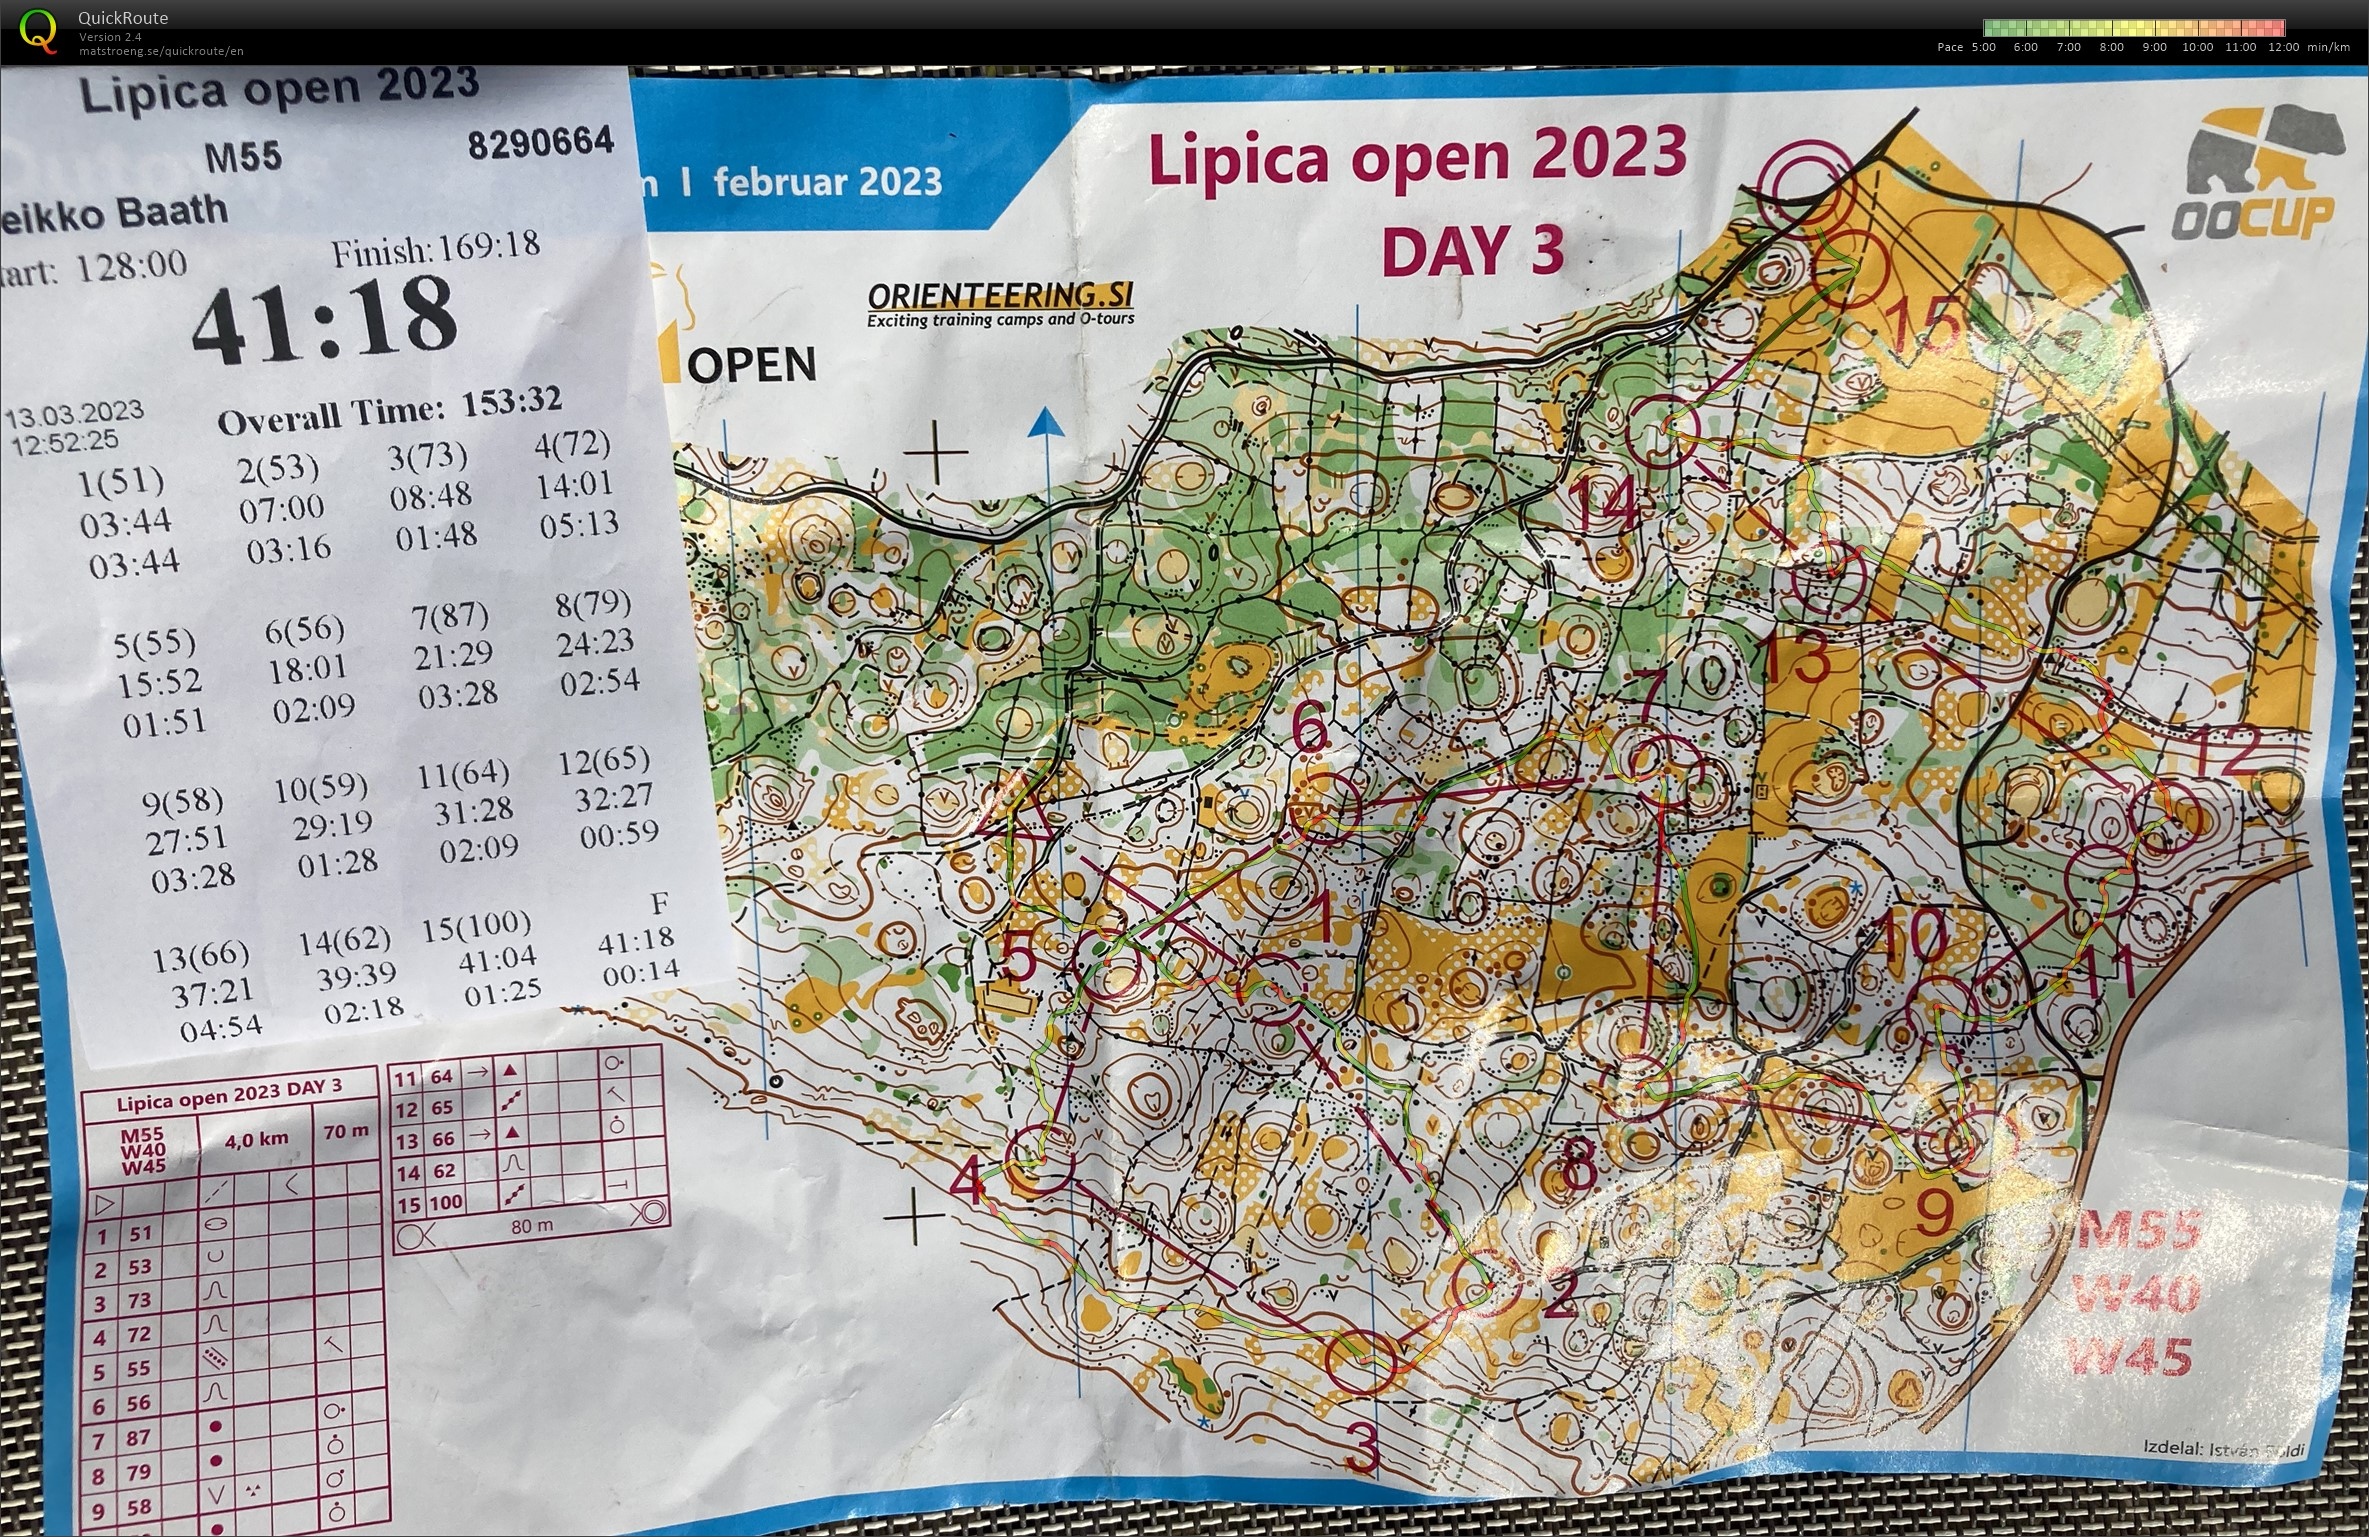 Lipica Open 2023 E3 (2023-03-13)